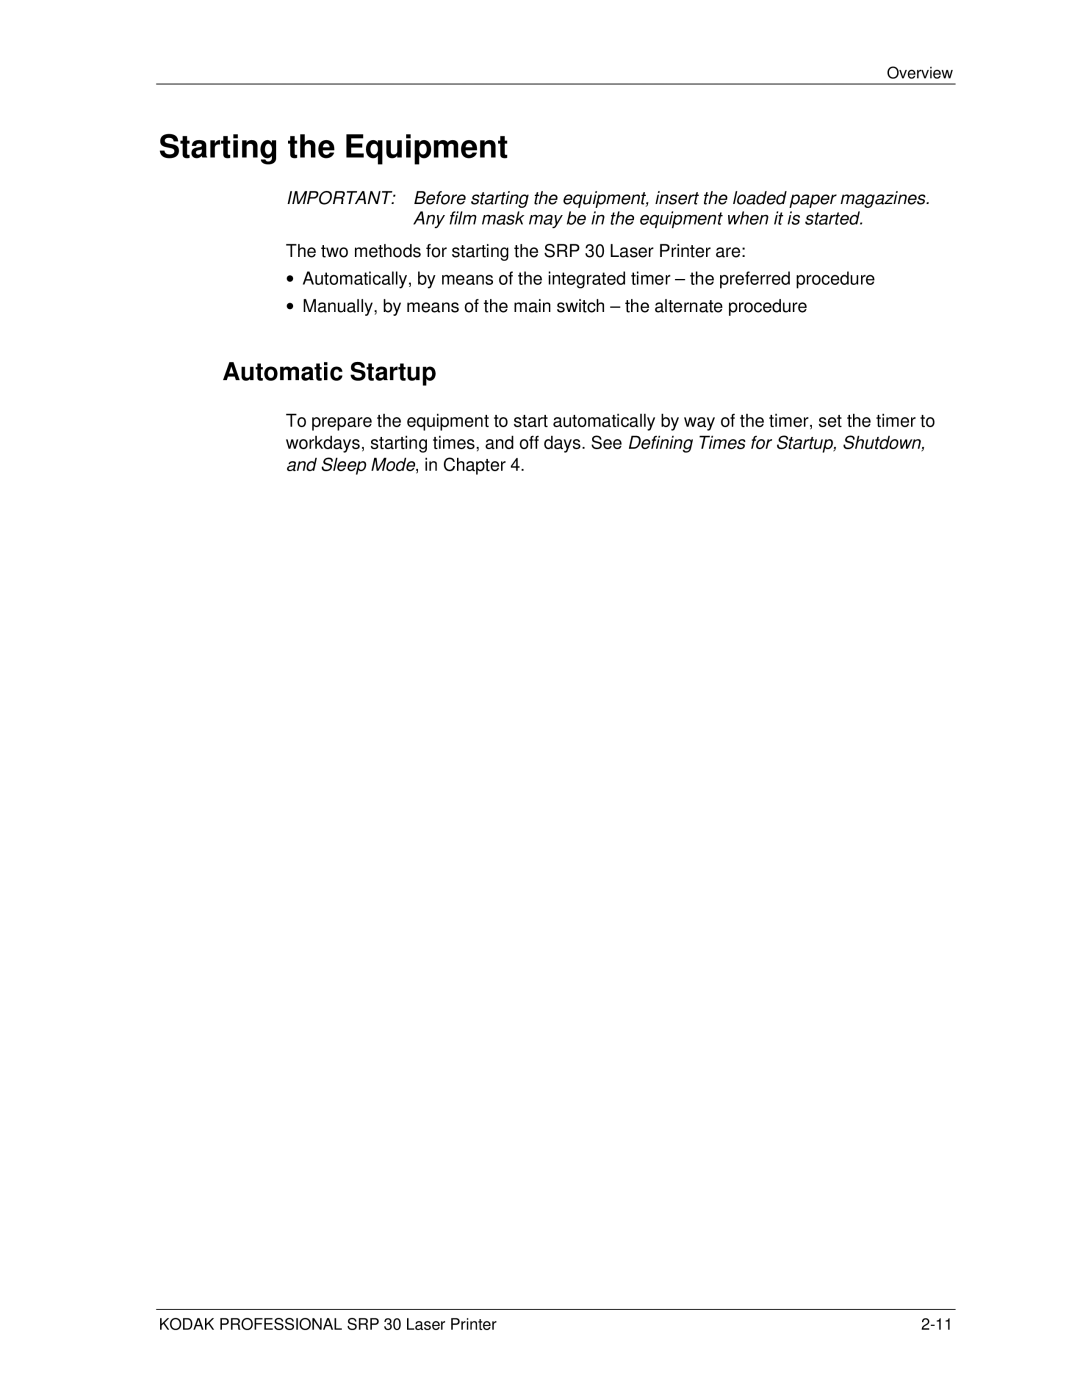 Kodak SRP 30 manual Starting the Equipment, Automatic Startup 